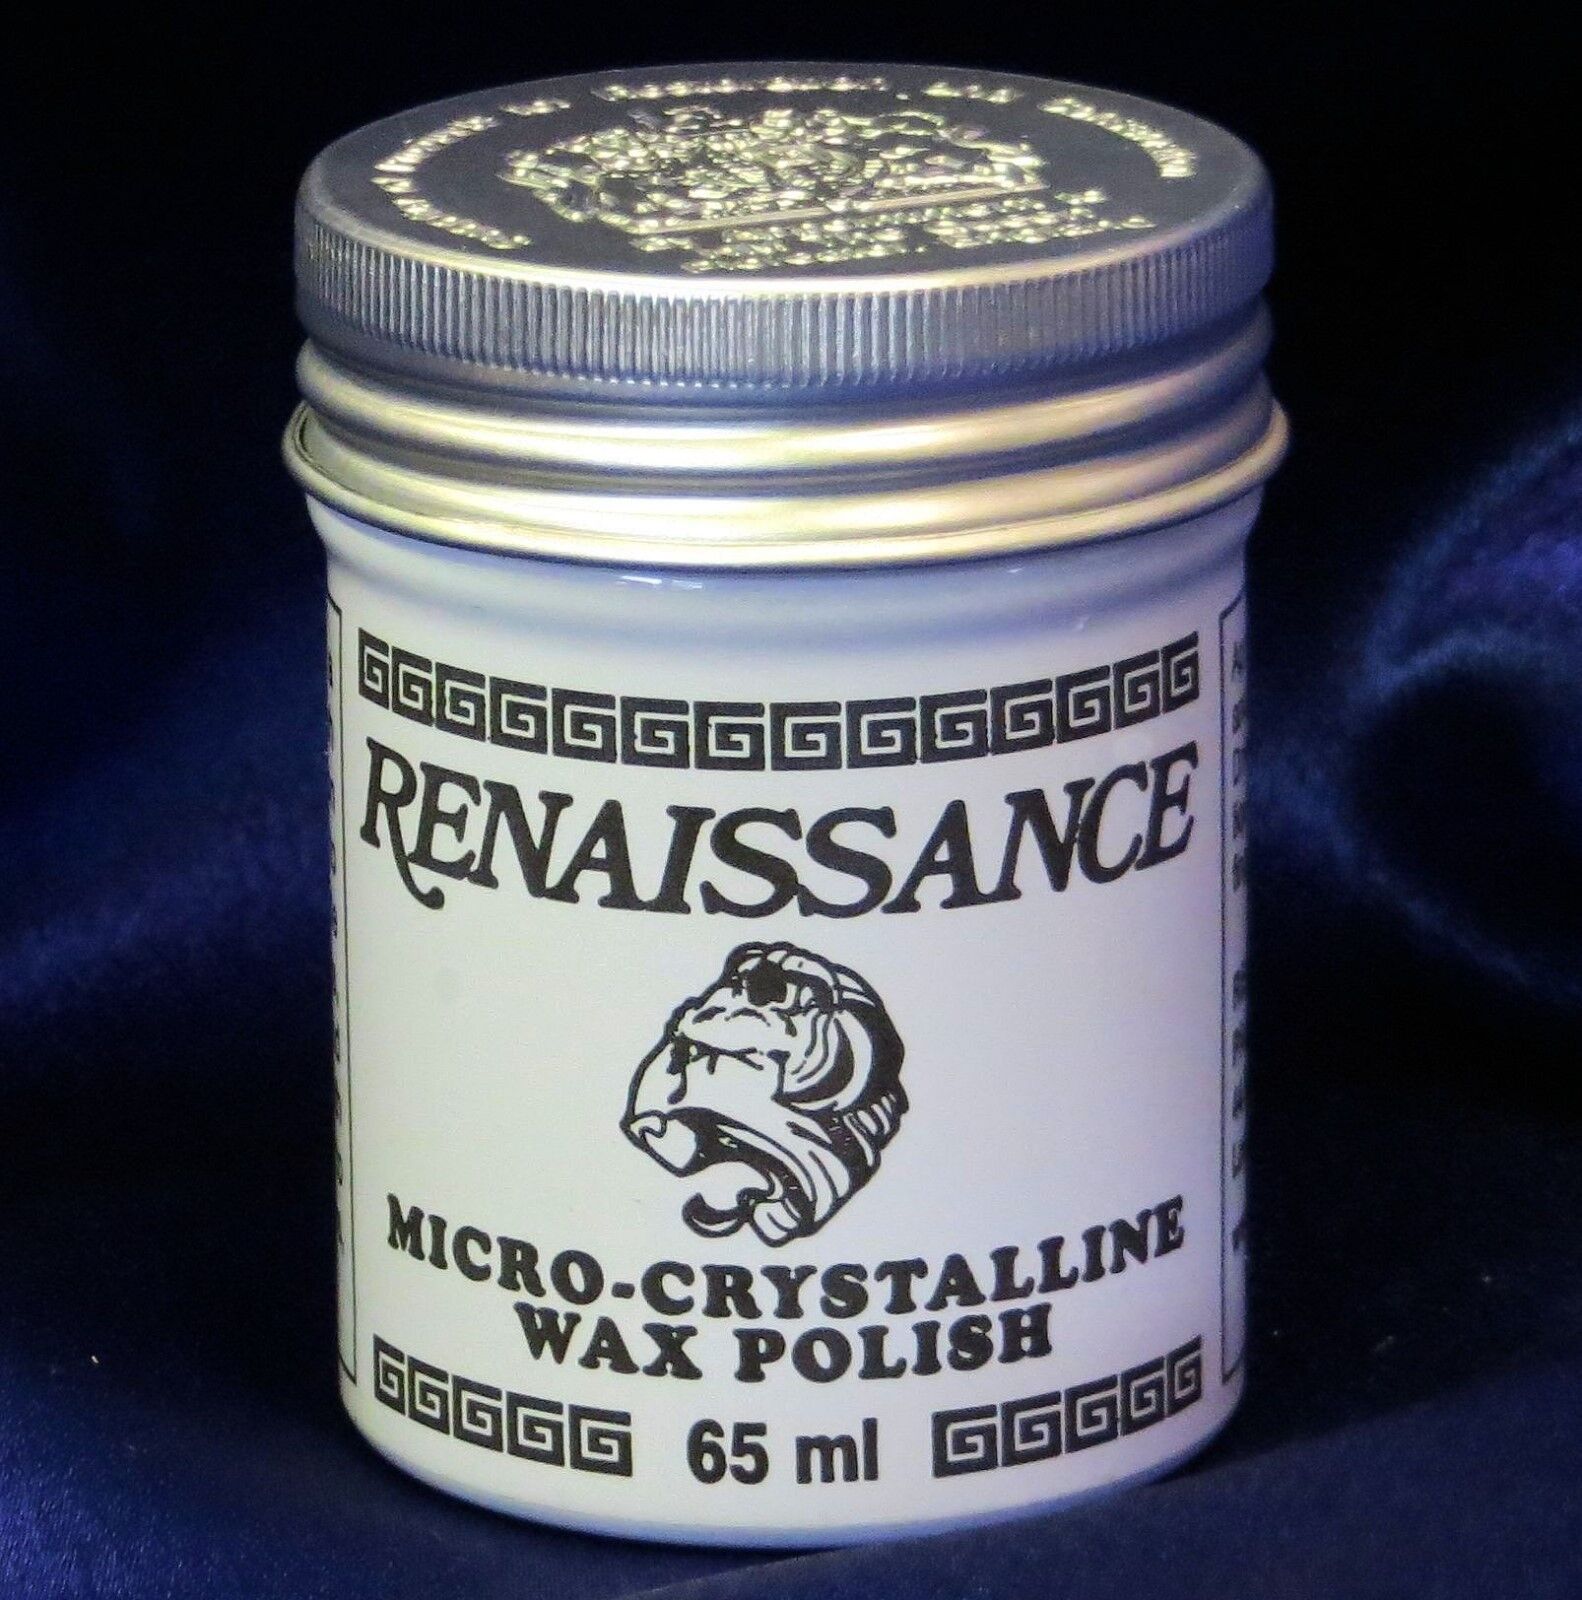 Renaissance Wax - Micro-Crystalline Wax Polish - 65ml (2.25oz) Can Picreator Enterprises Ltd.